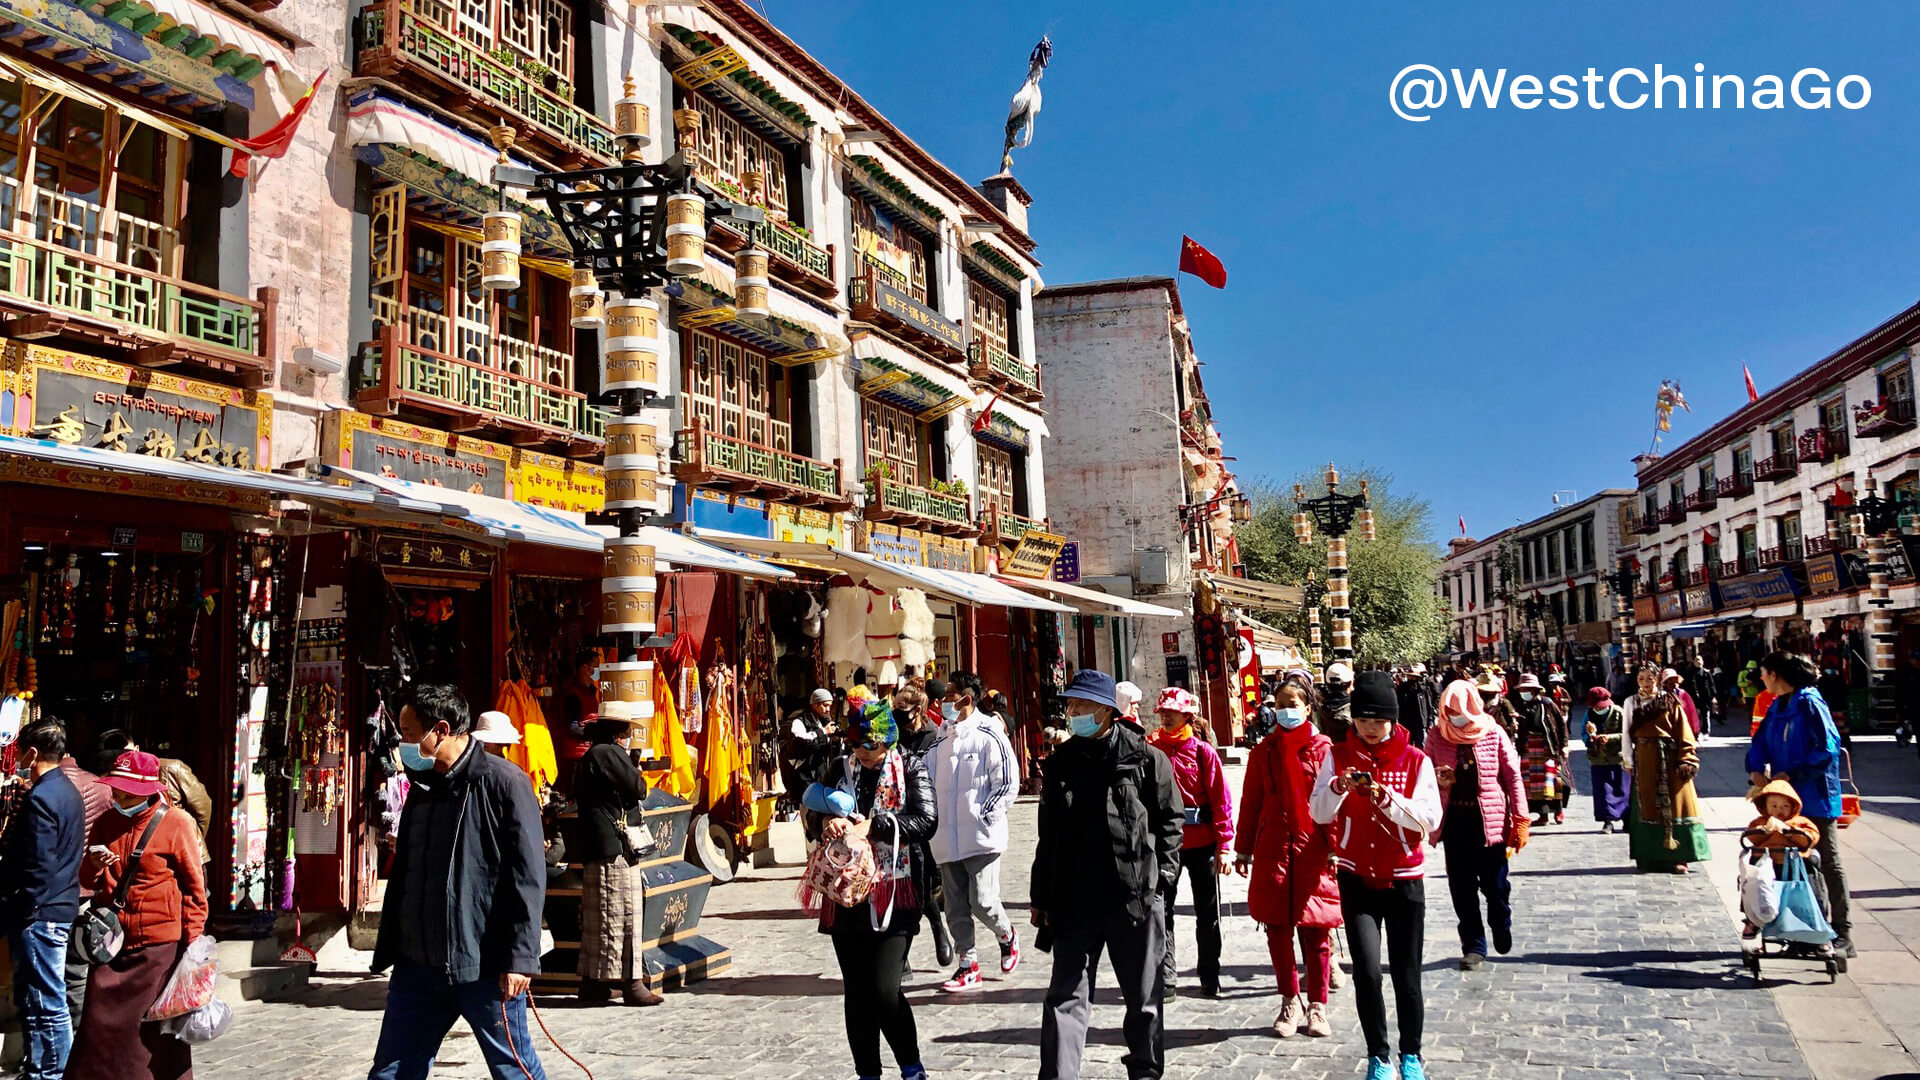 Barkhor Street.Tibet